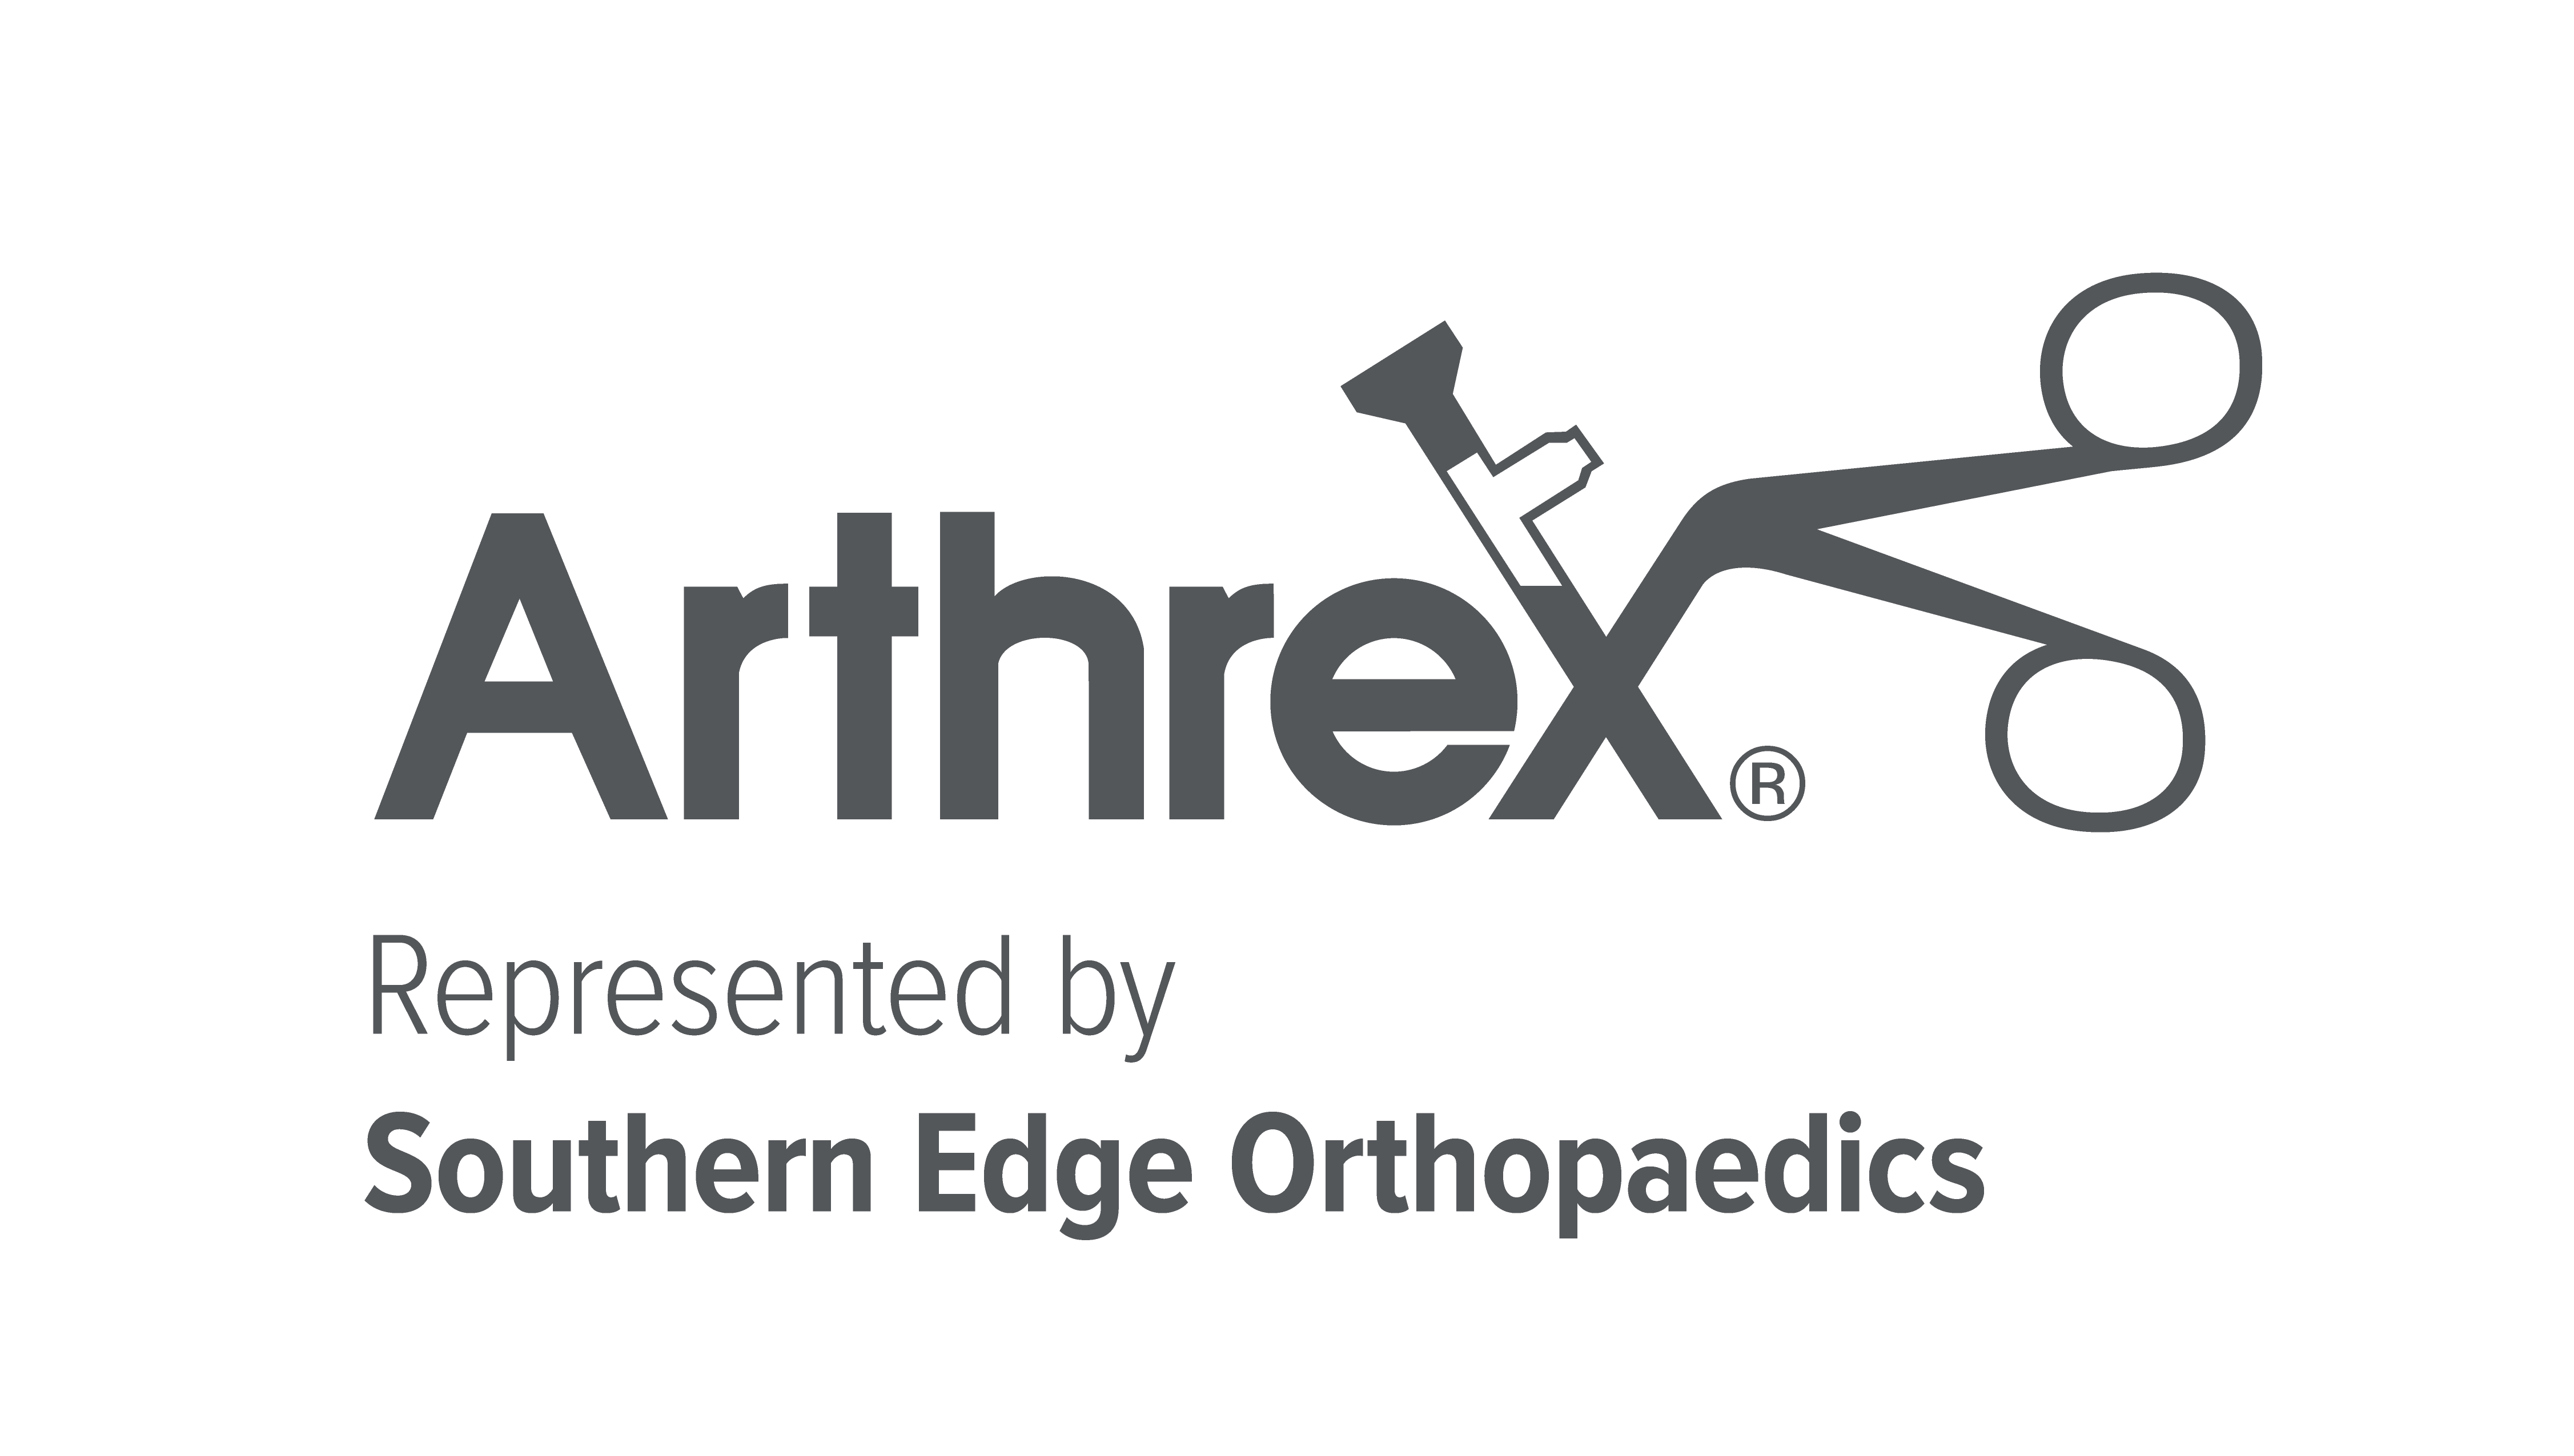 Southern Edge Orthopaedics, Inc. logo